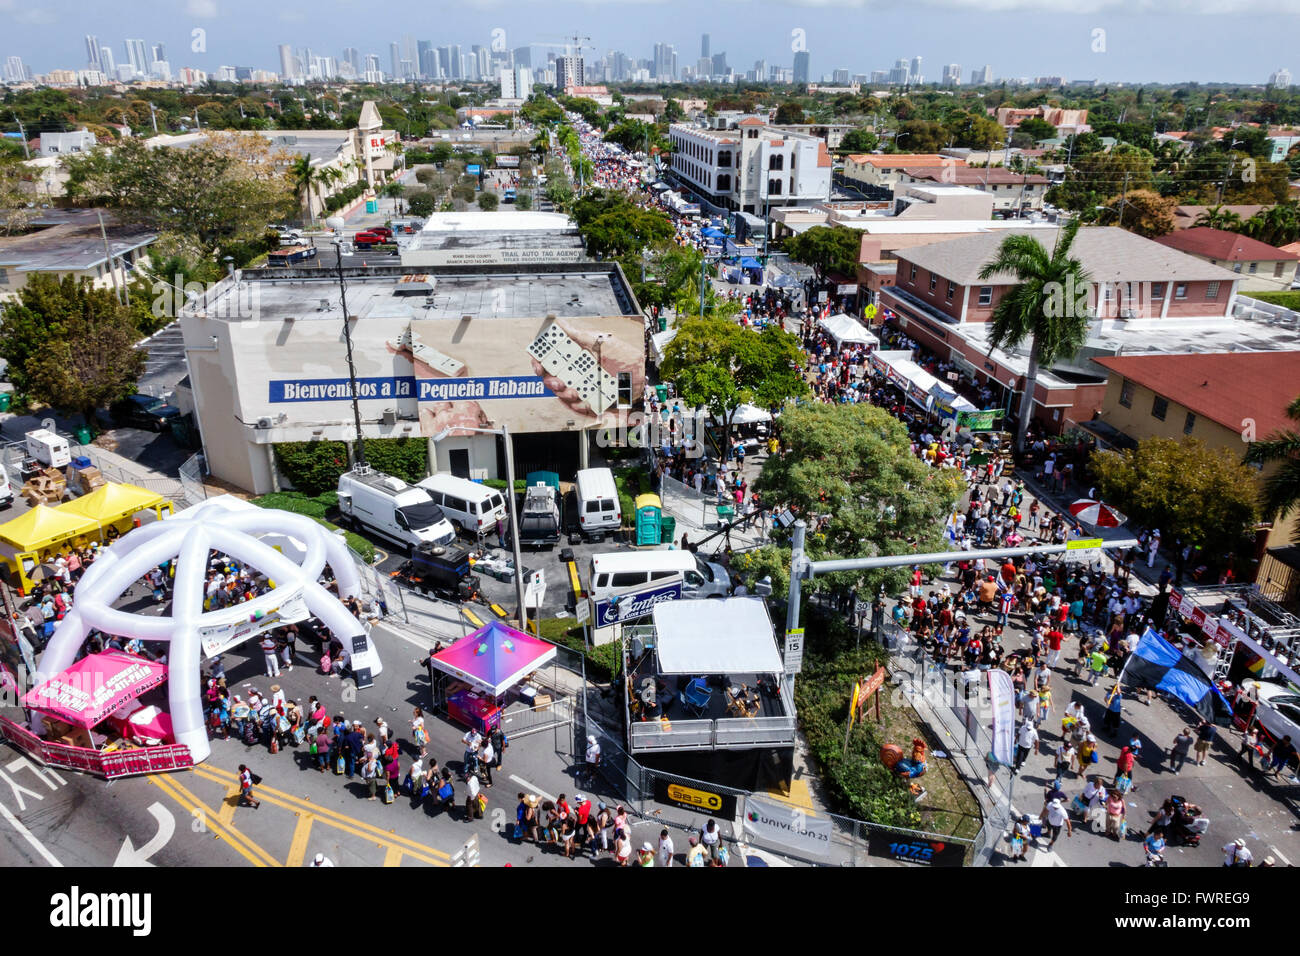 Miami Florida,Little Havana,Calle Ocho,annual street festival,Hispanic crowd,city skyline,FL160324110 Stock Photo